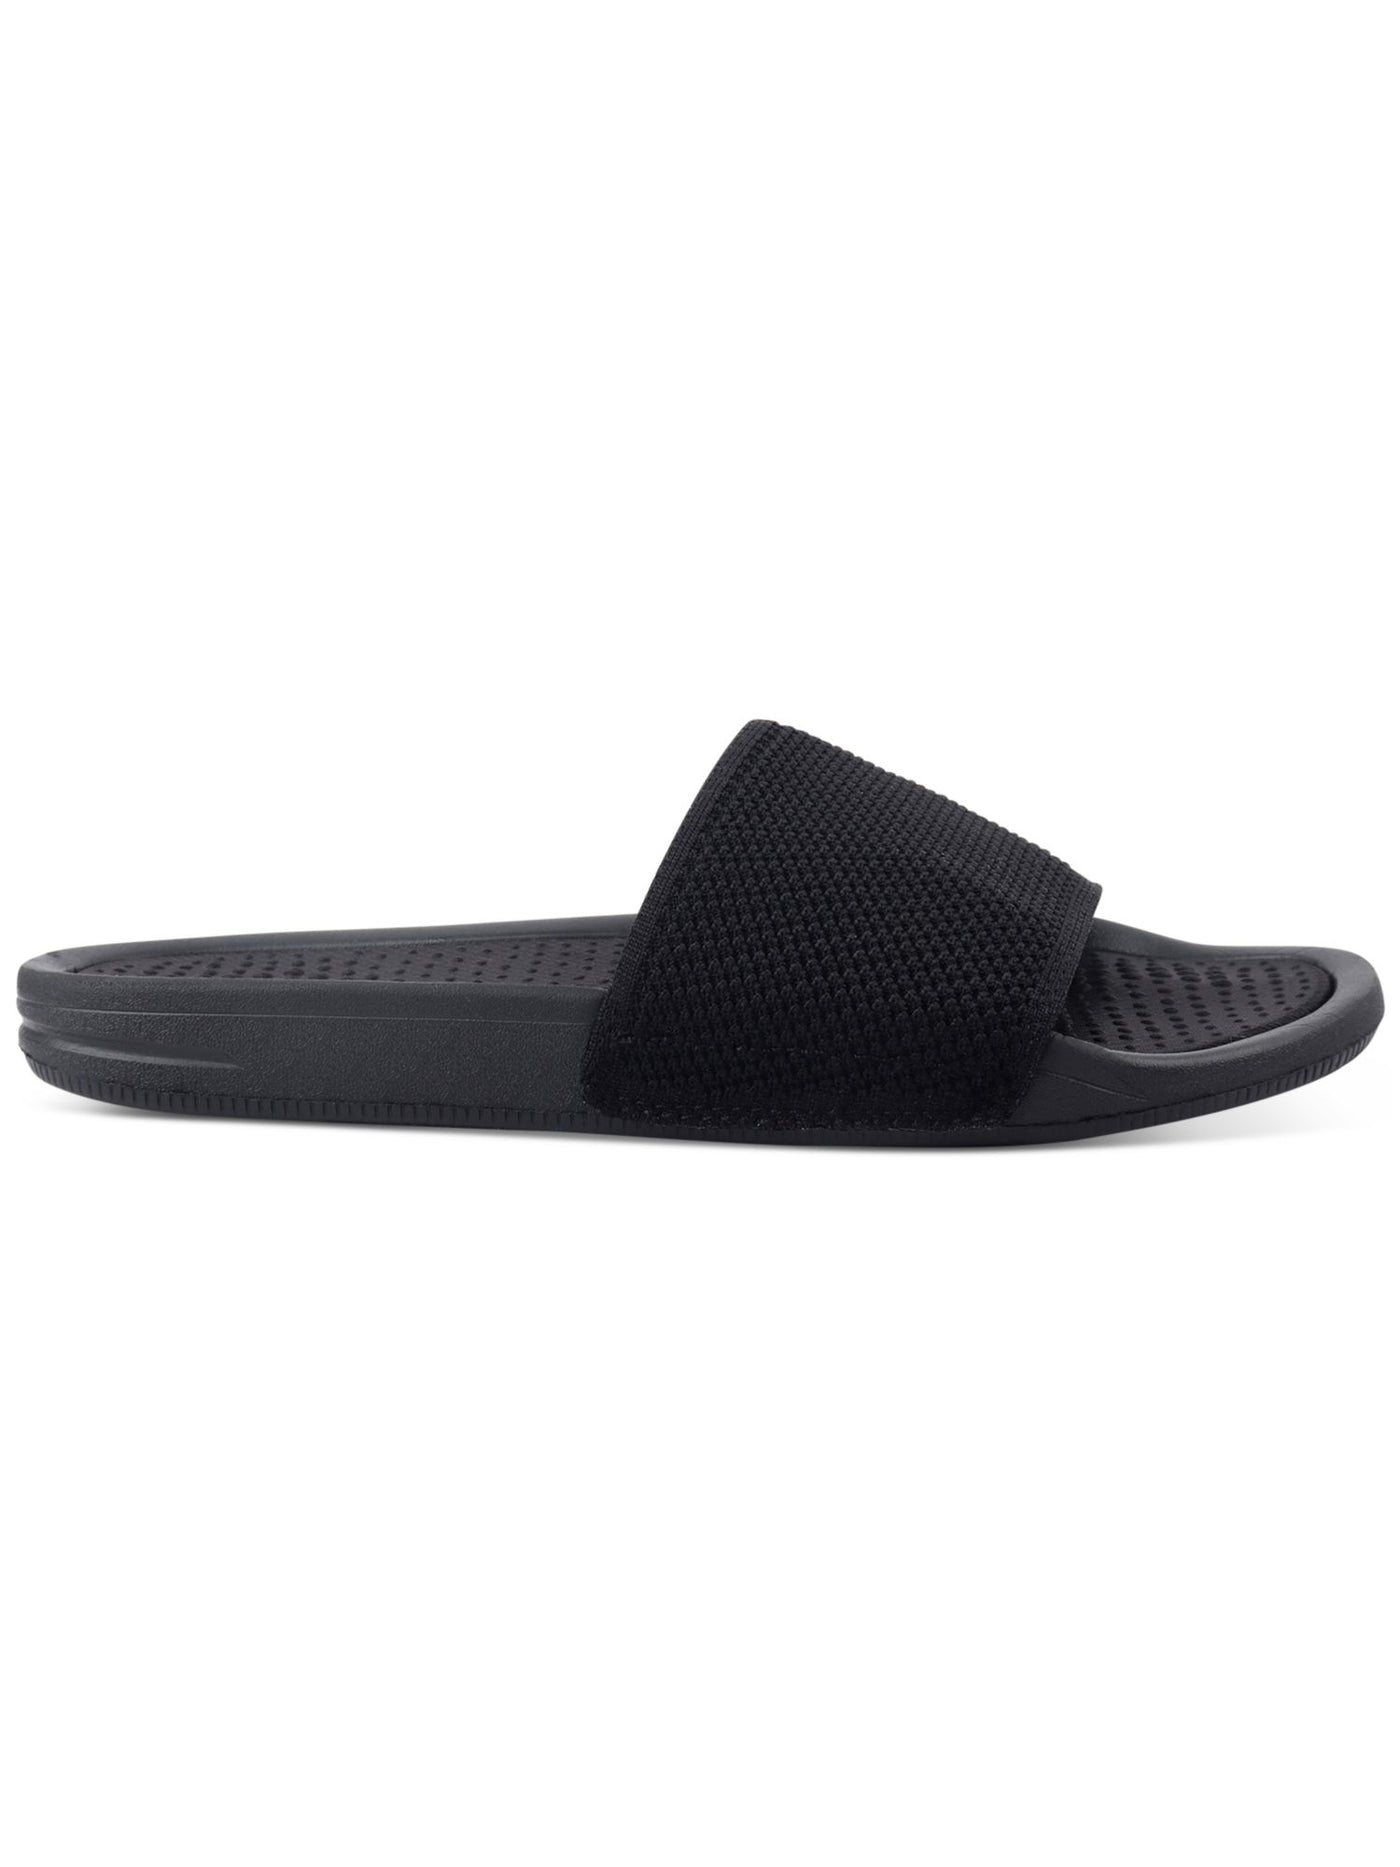 ALFANI Mens Black Knit Cushioned Comfort Ace Round Toe Platform Slip On Slide Sandals Shoes 7 M